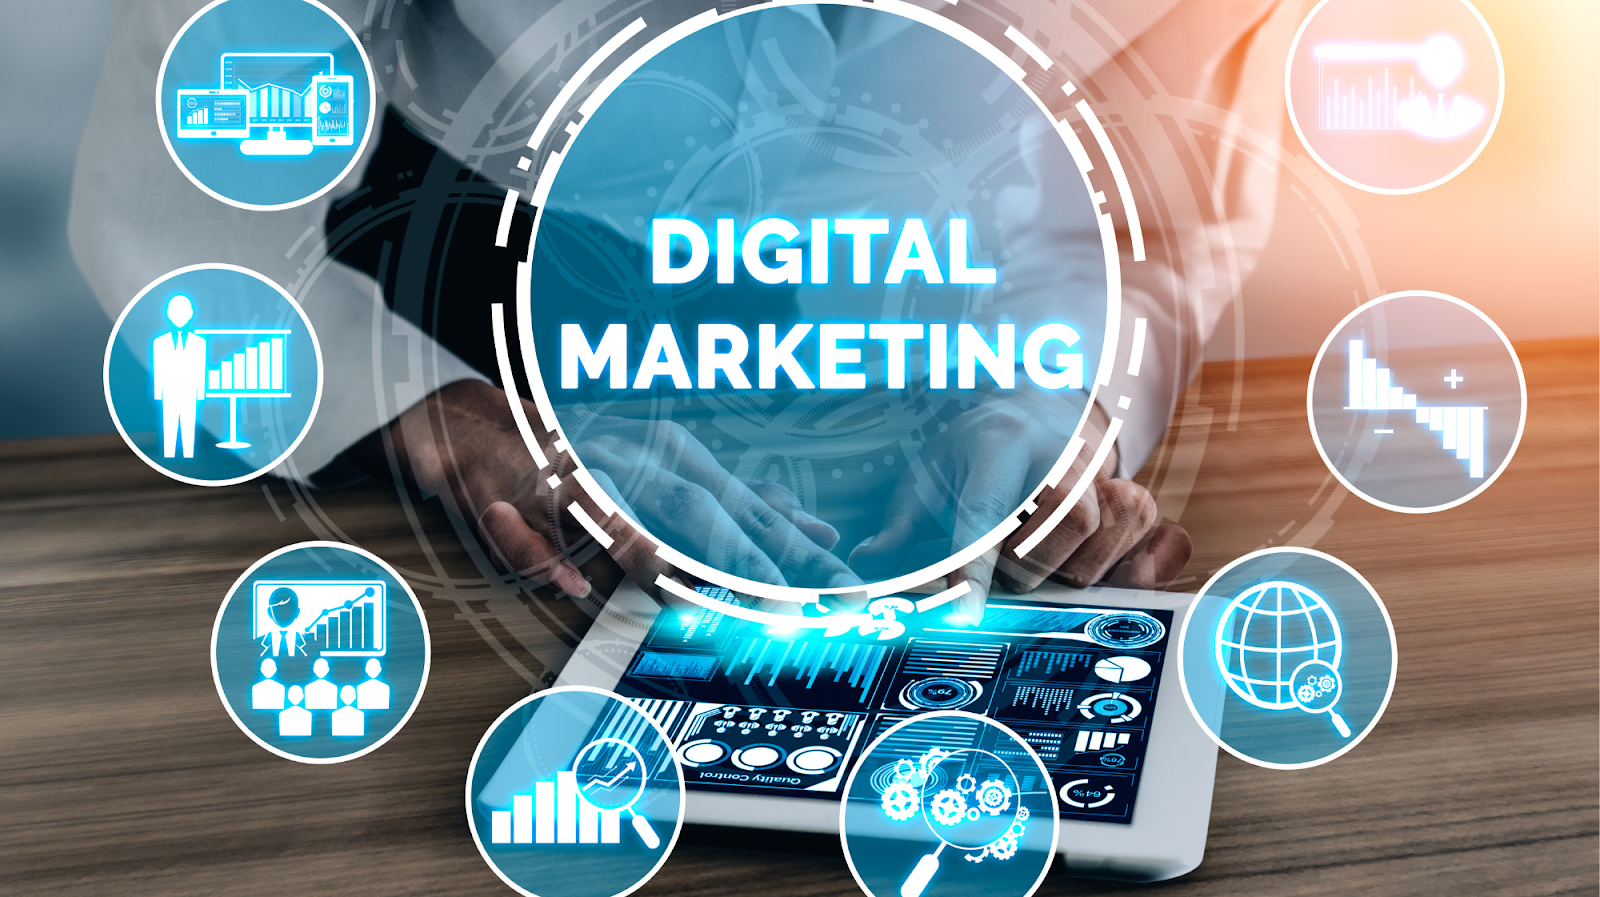 digital marketing strategy

